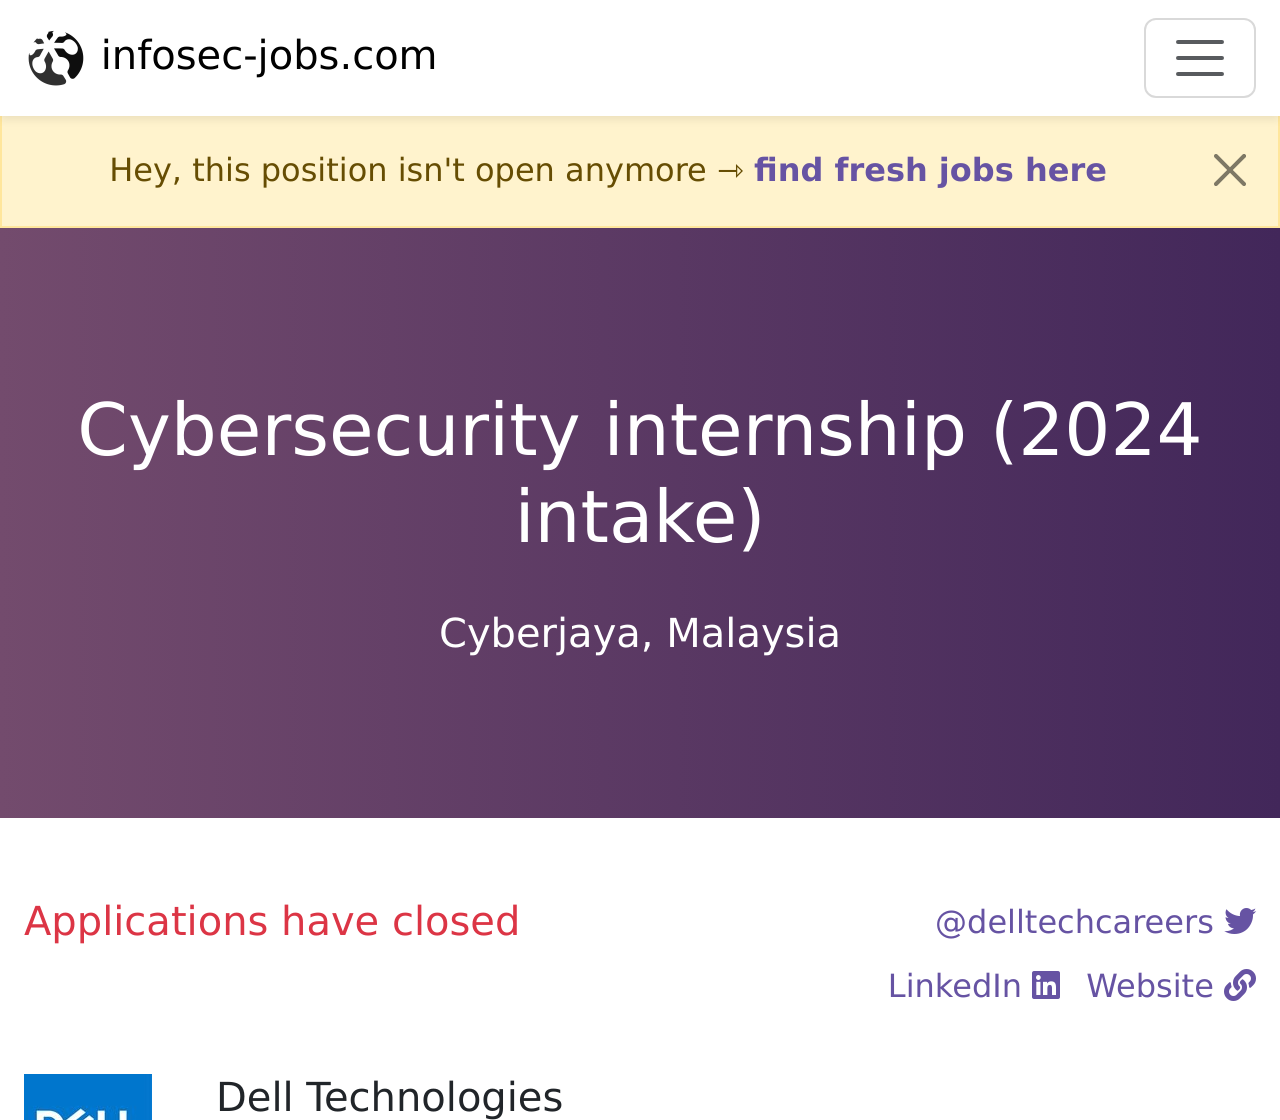 Cybersecurity internship (2024 intake) at Dell Technologies Cyberjaya